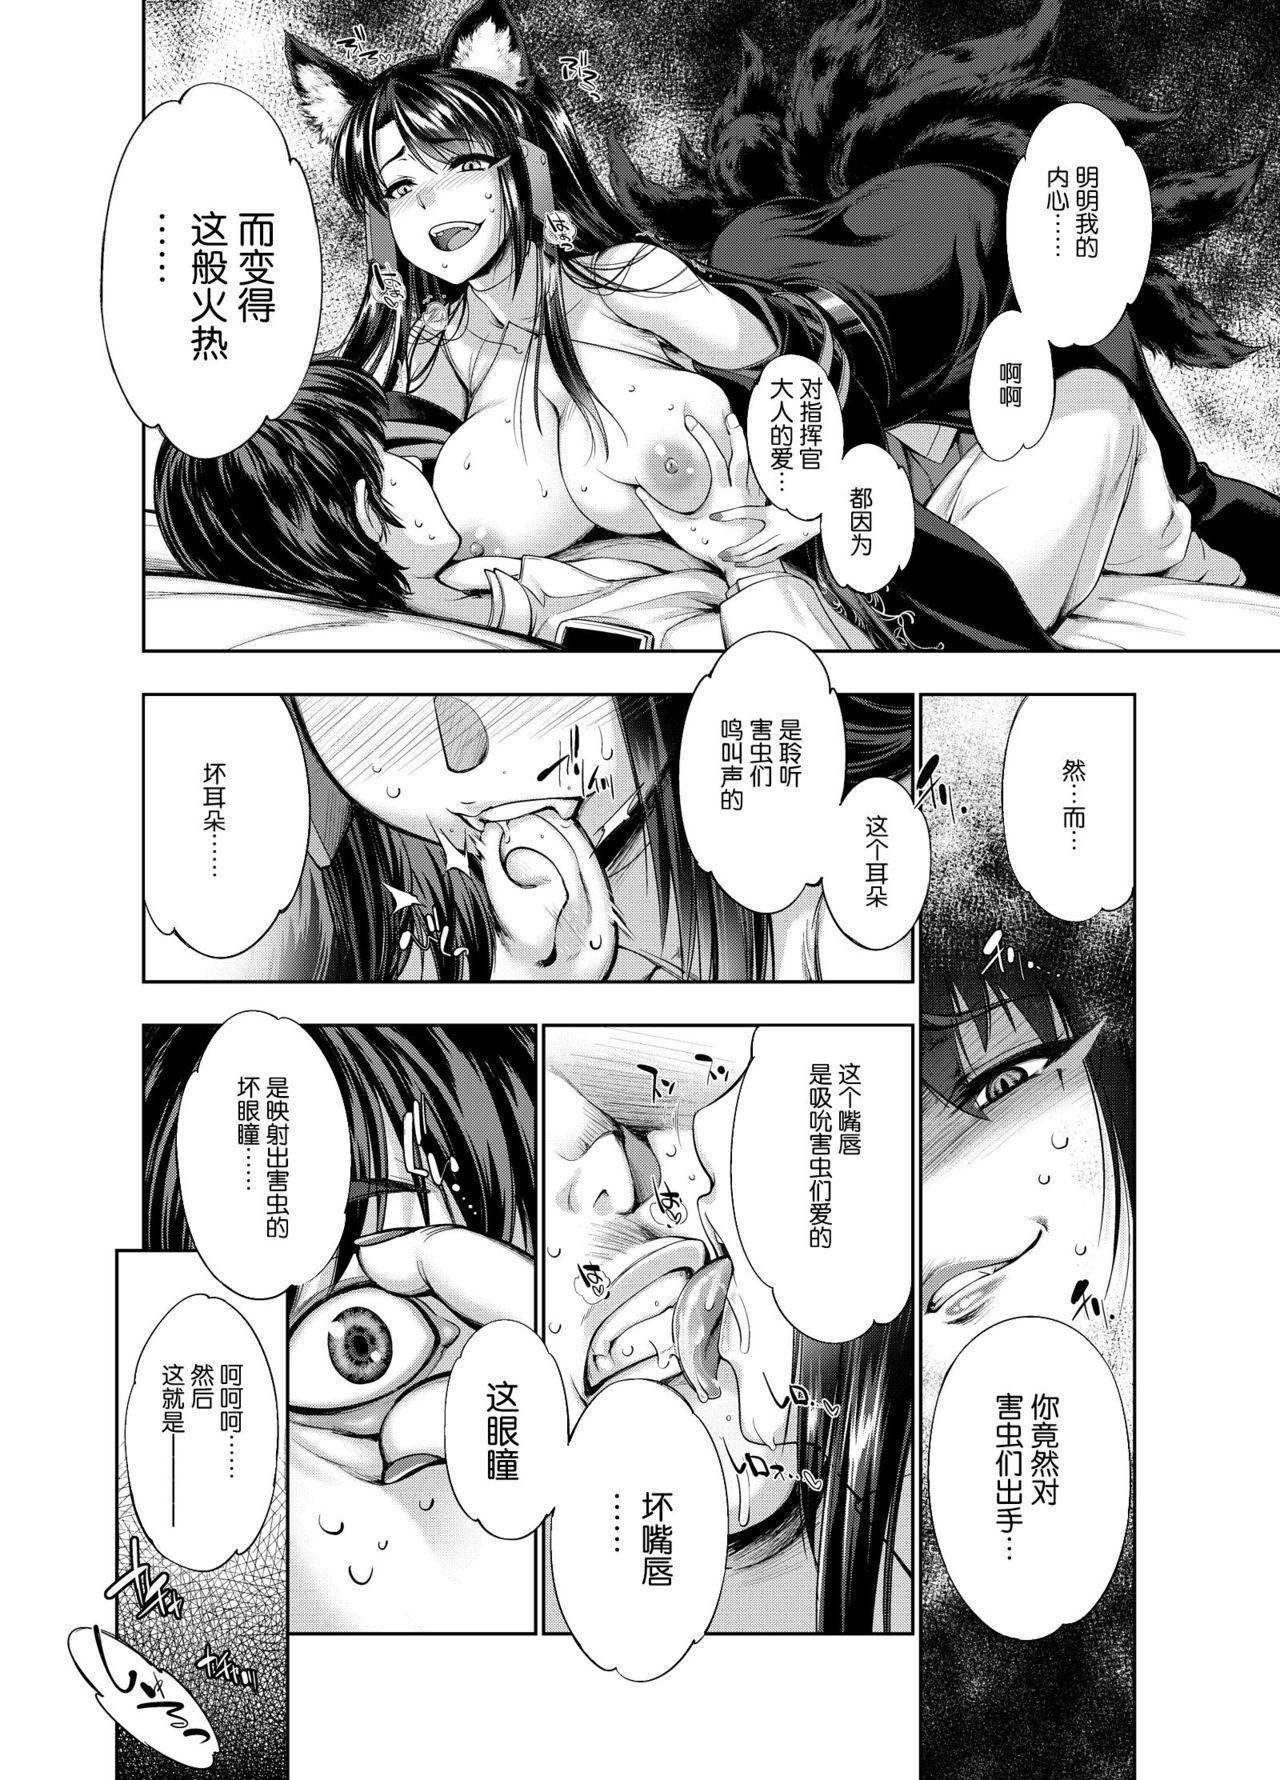 Tats Akagiwazurai - Azur lane Exgirlfriend - Page 7